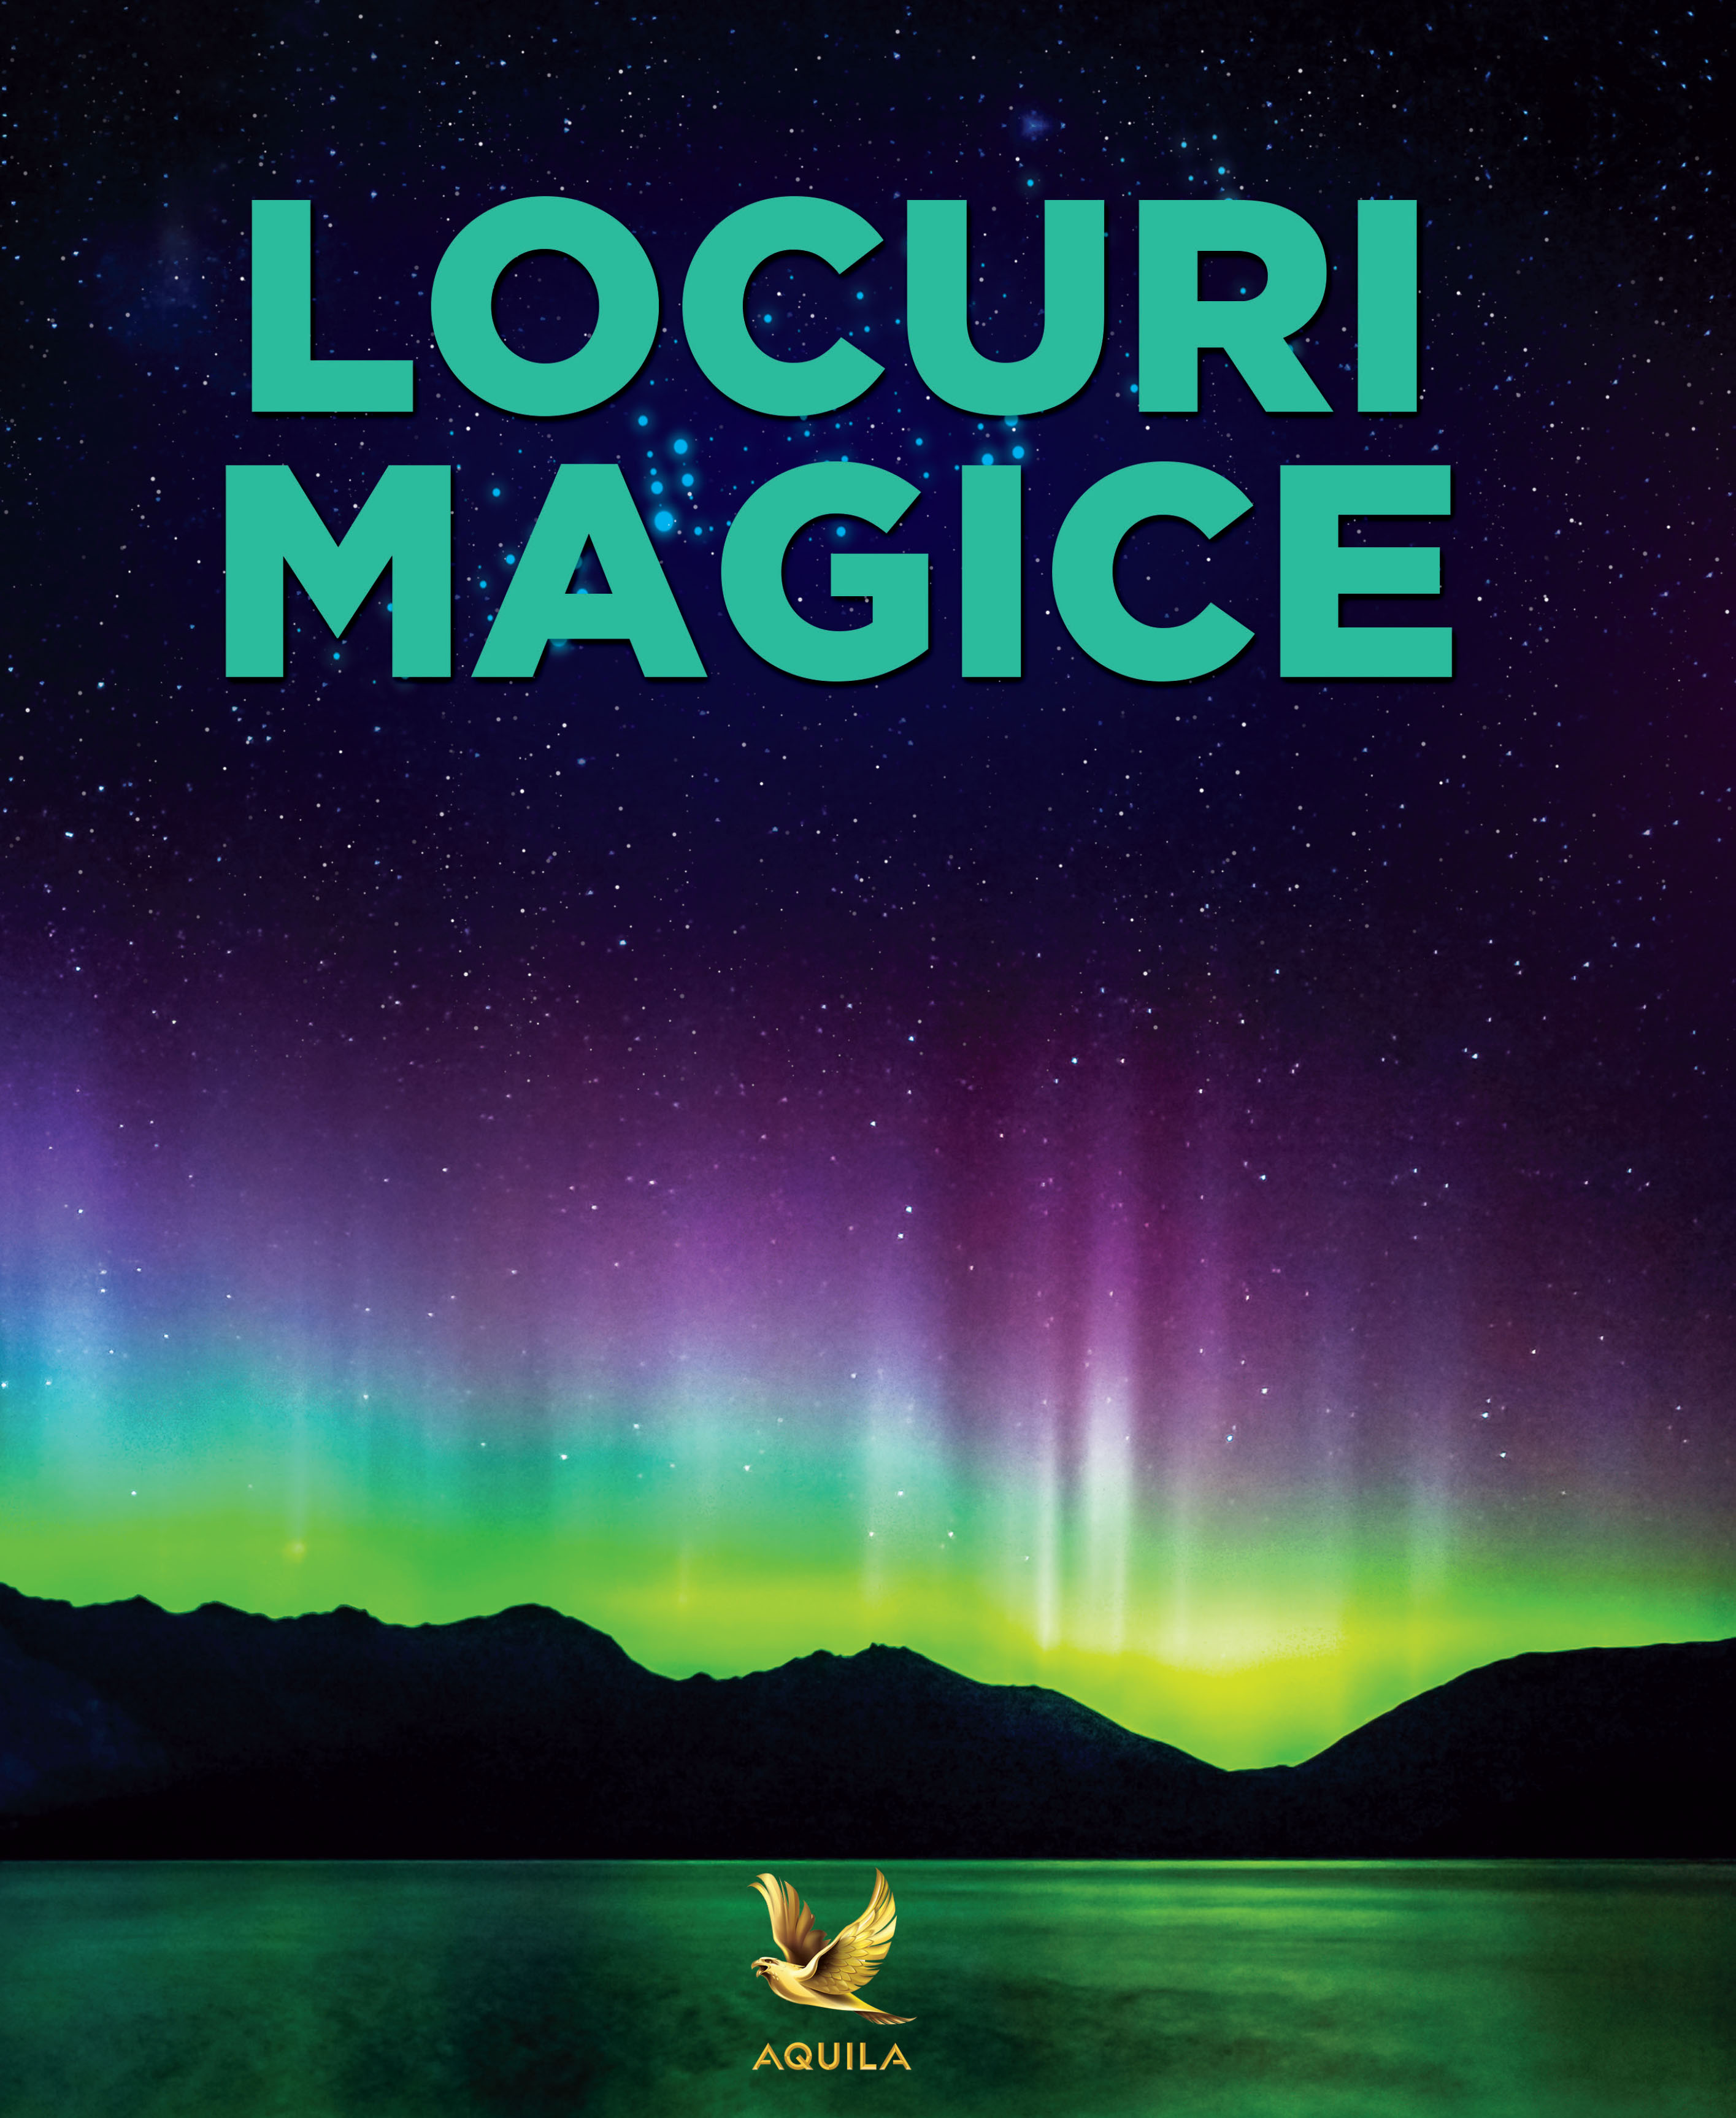 Locuri magice | carturesti.ro poza bestsellers.ro